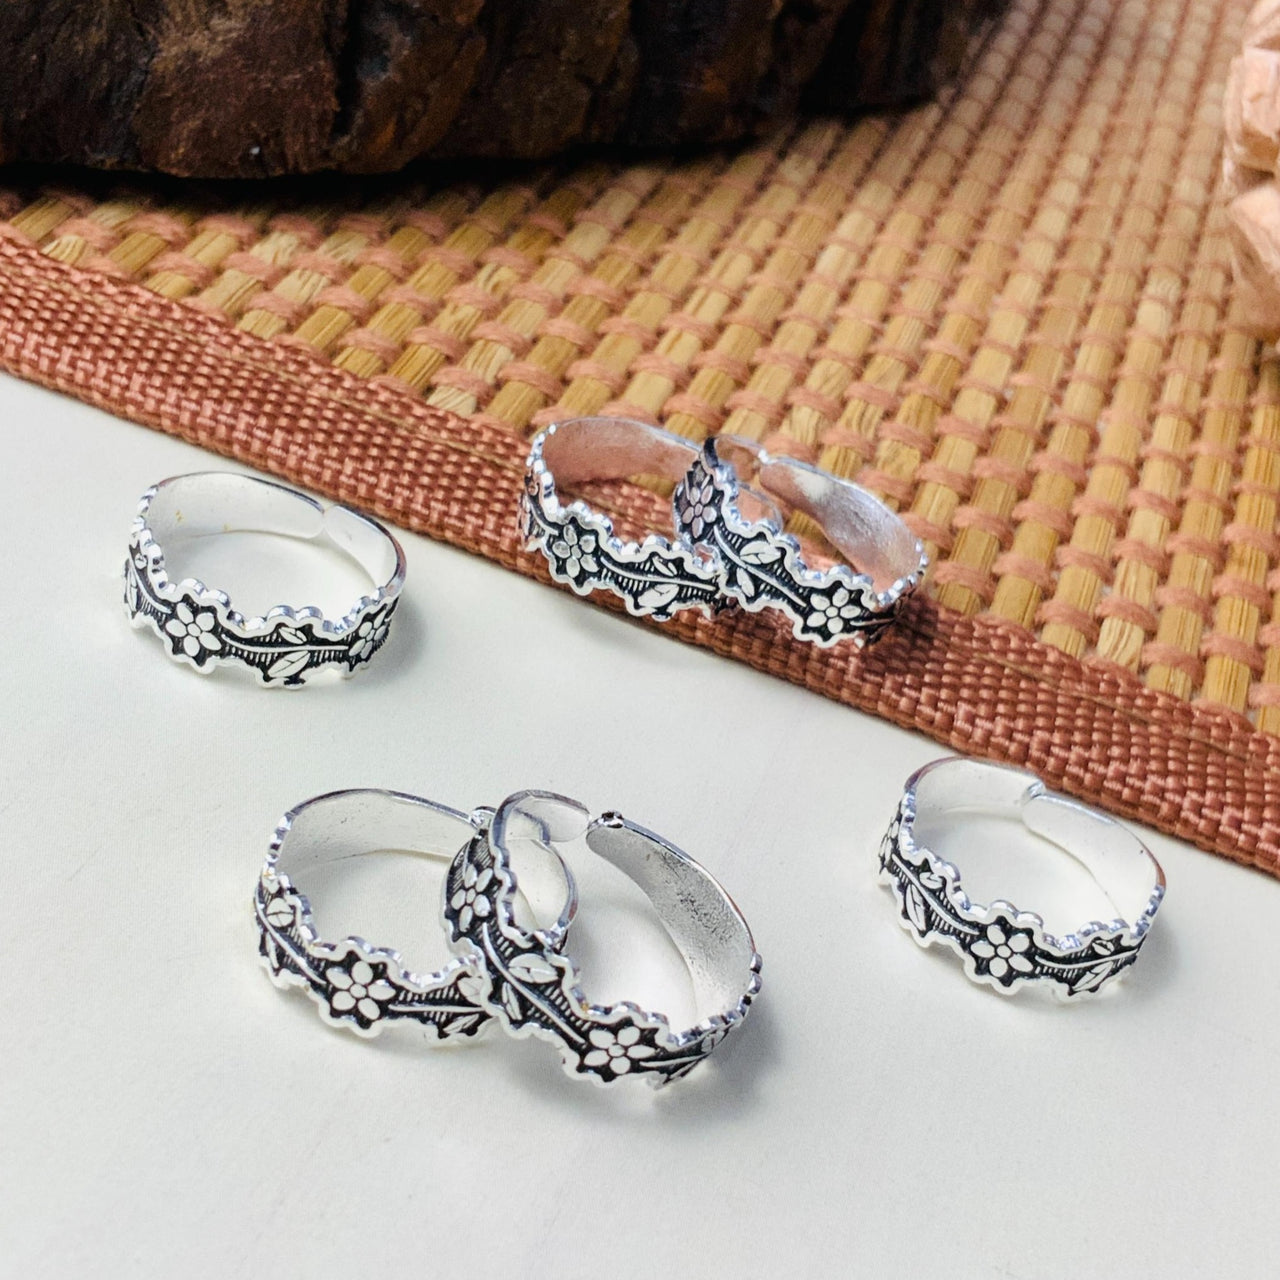 Elegant Silver Oxidised Pack of 3 Pairs Toe Rings Combo - Abdesignsjewellery